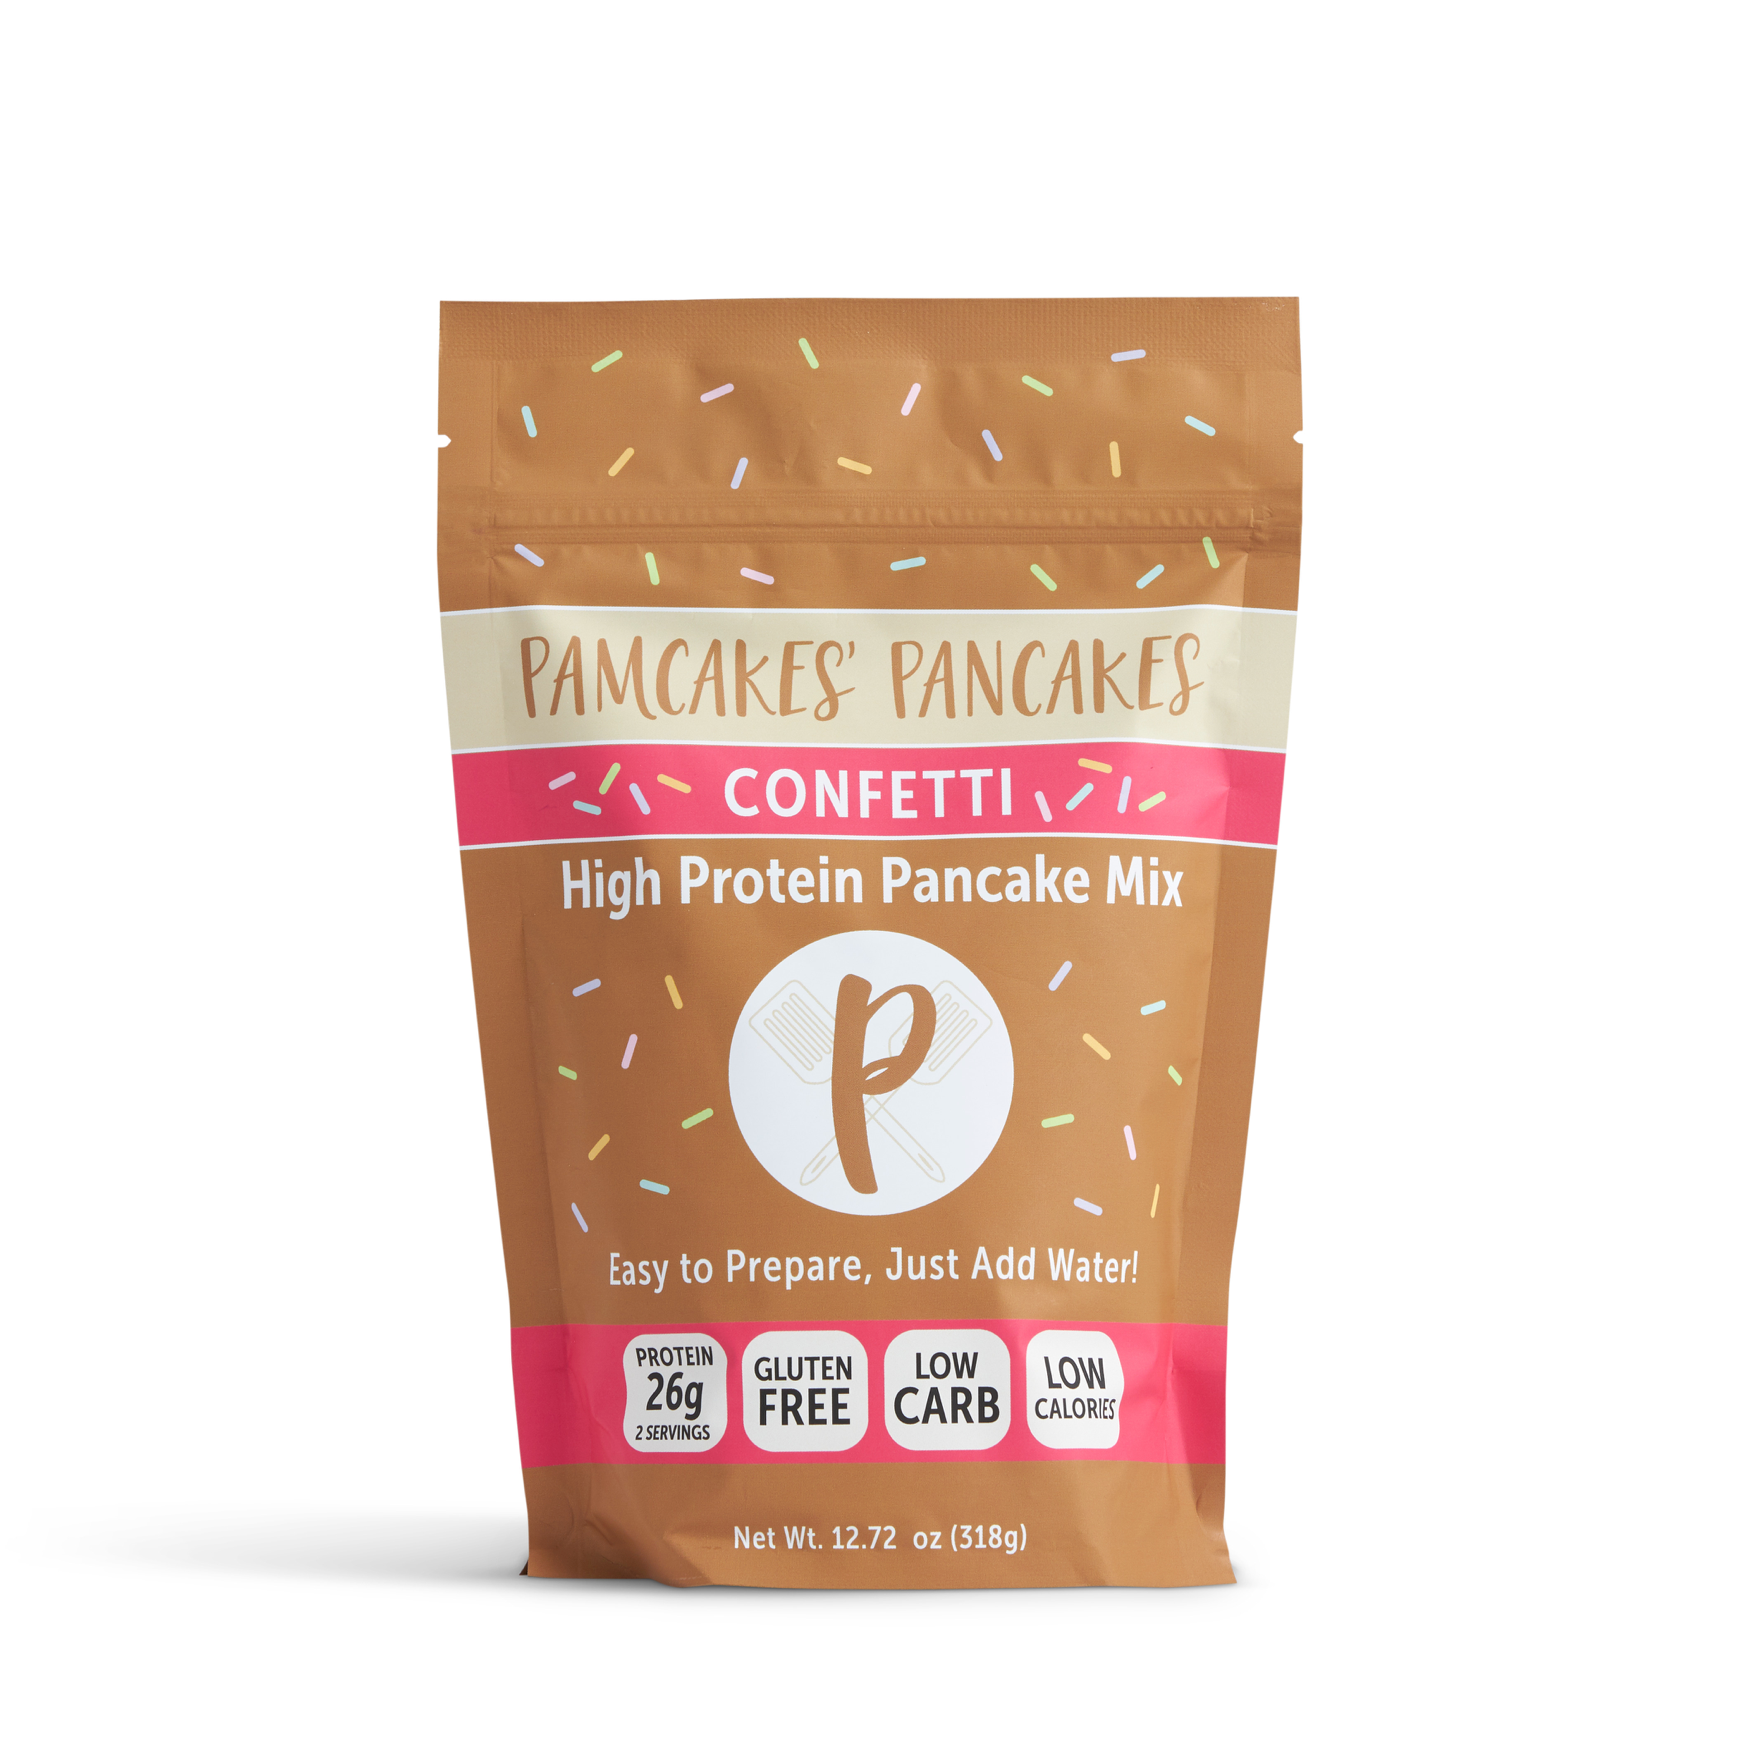 Confetti Pancake – Pamcakes' Pancakes